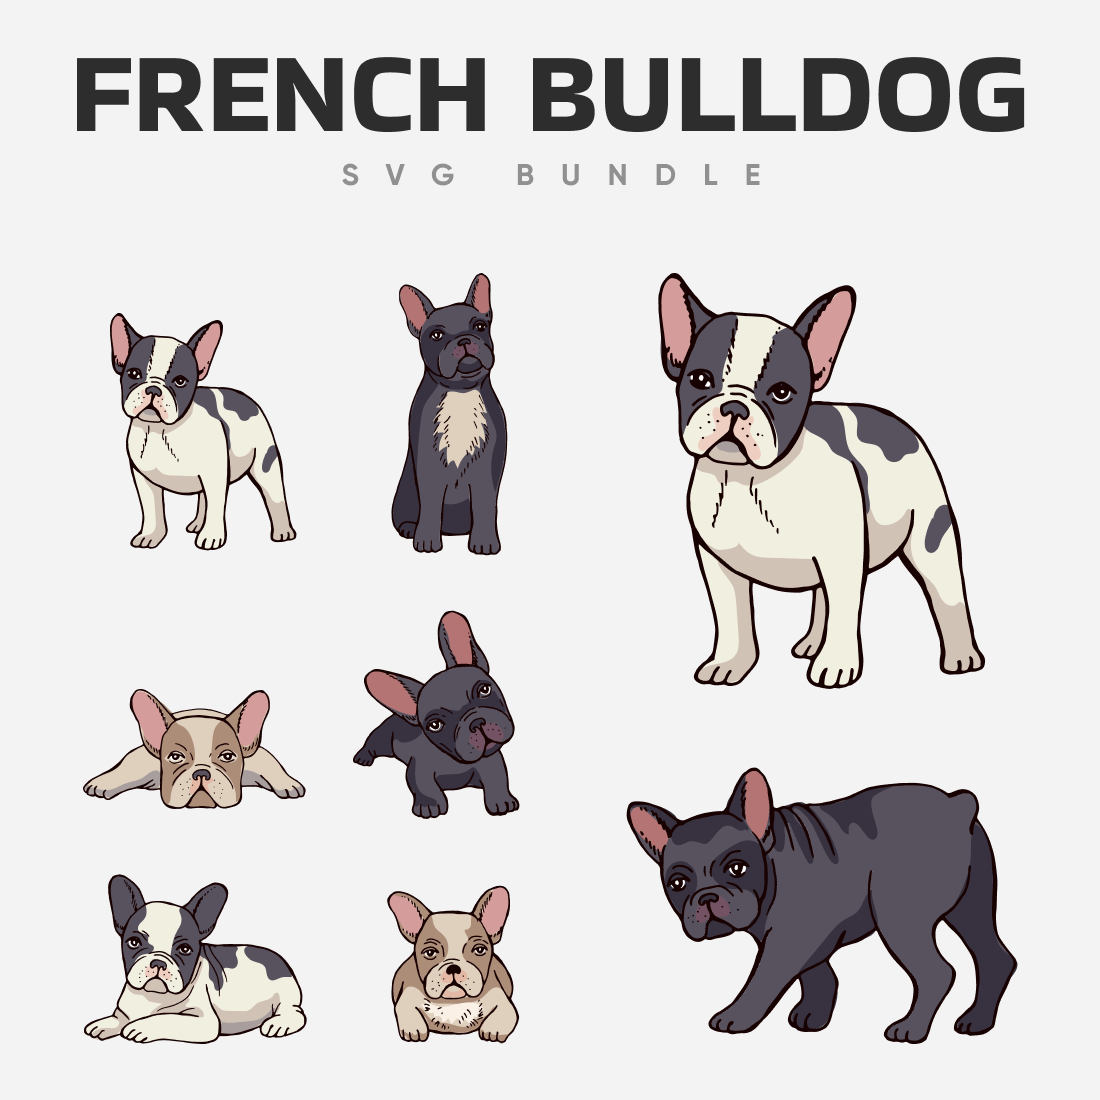 French bulldog svg bundle.